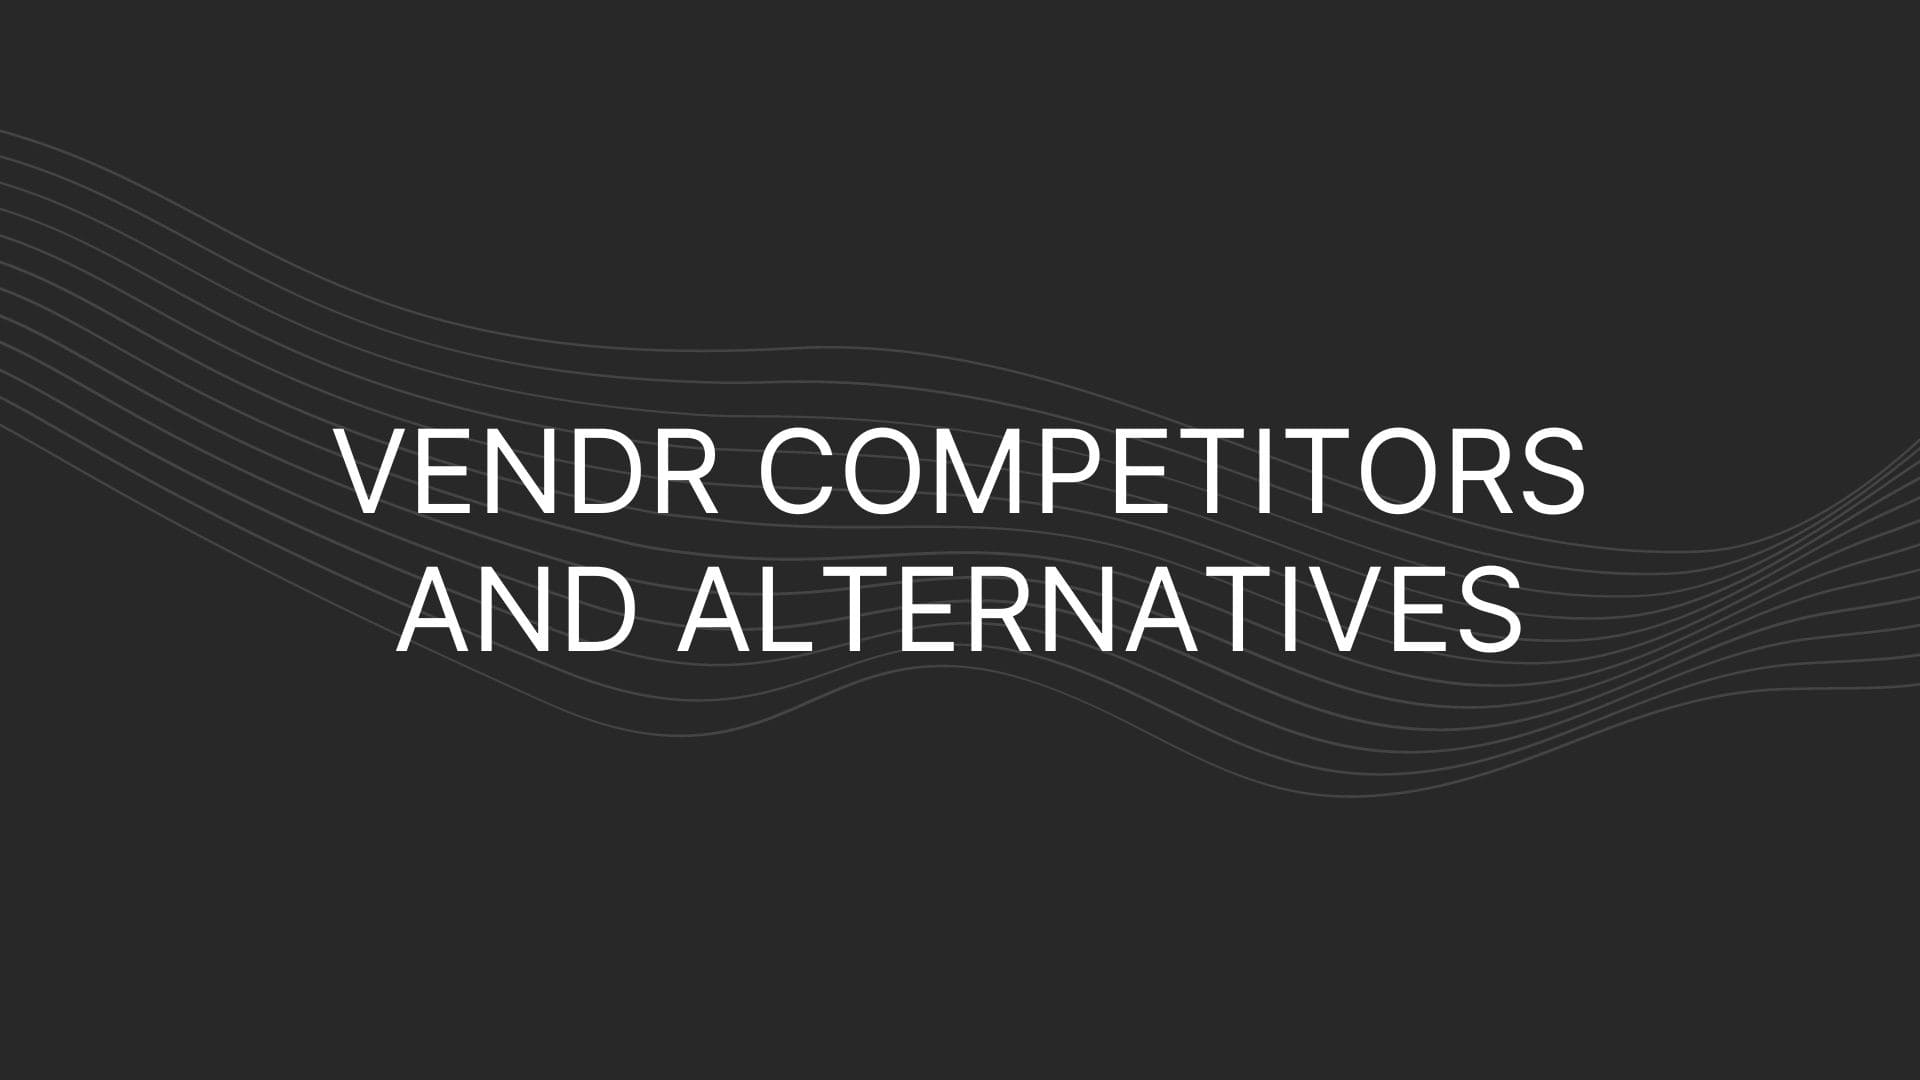 Vendr competitors and alternatives